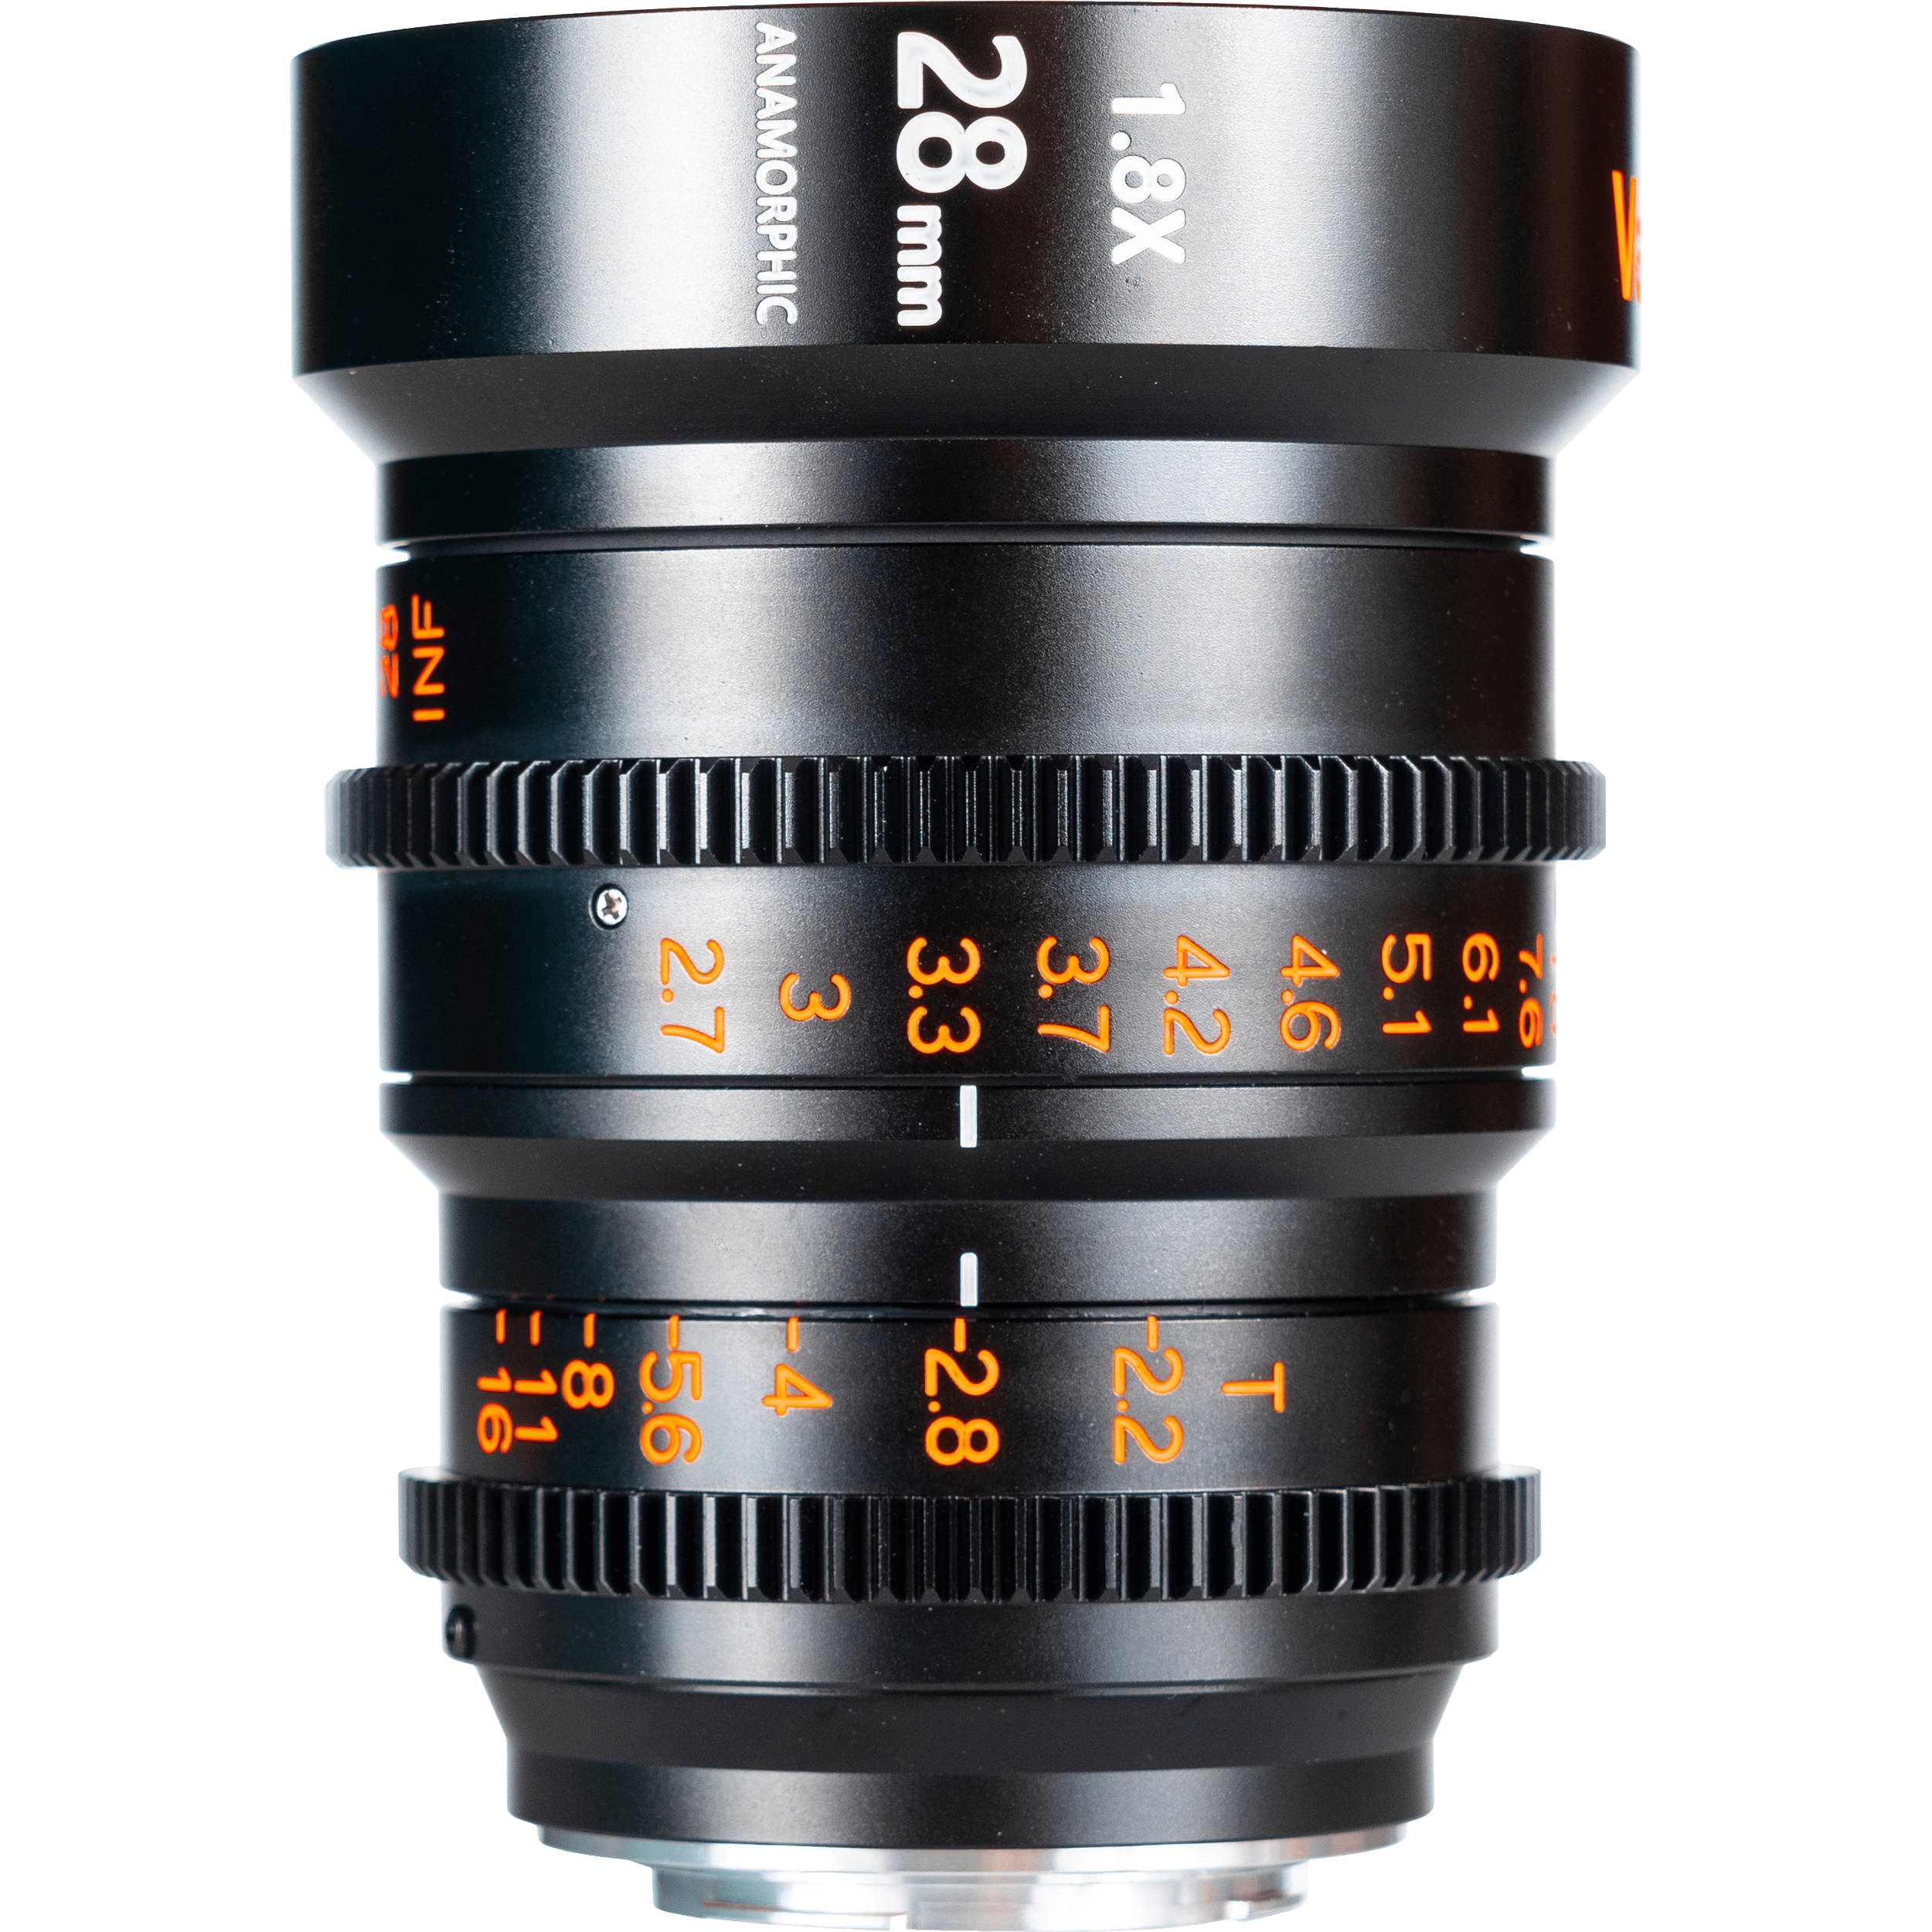 Vazen 28mm T/2.2 1.8X Anamorphic Lens for Canon RF Camera